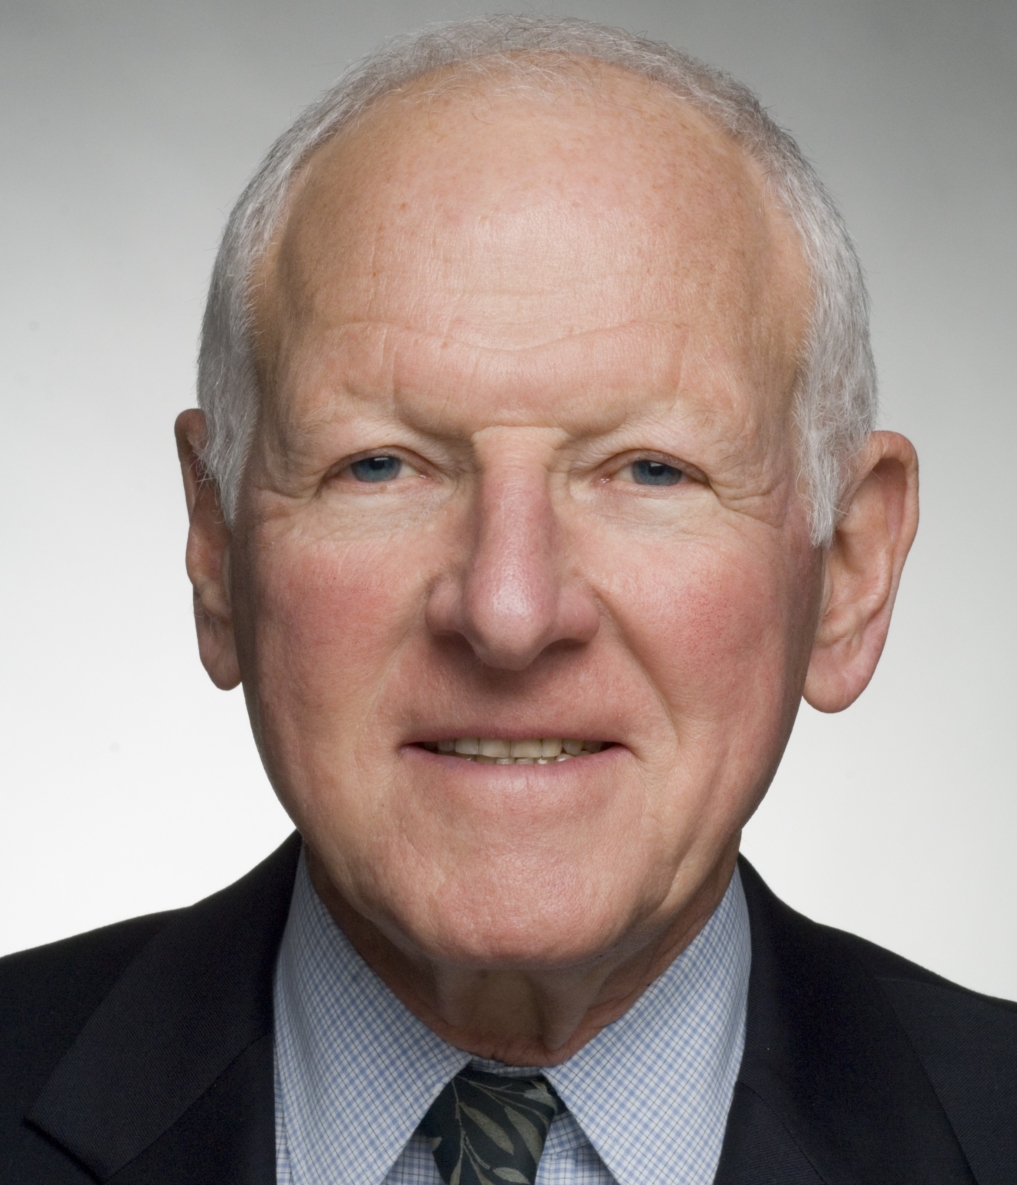 Dr. David Rothman, Professor Columbia University, Pres. Institute of Medicine as a Profession